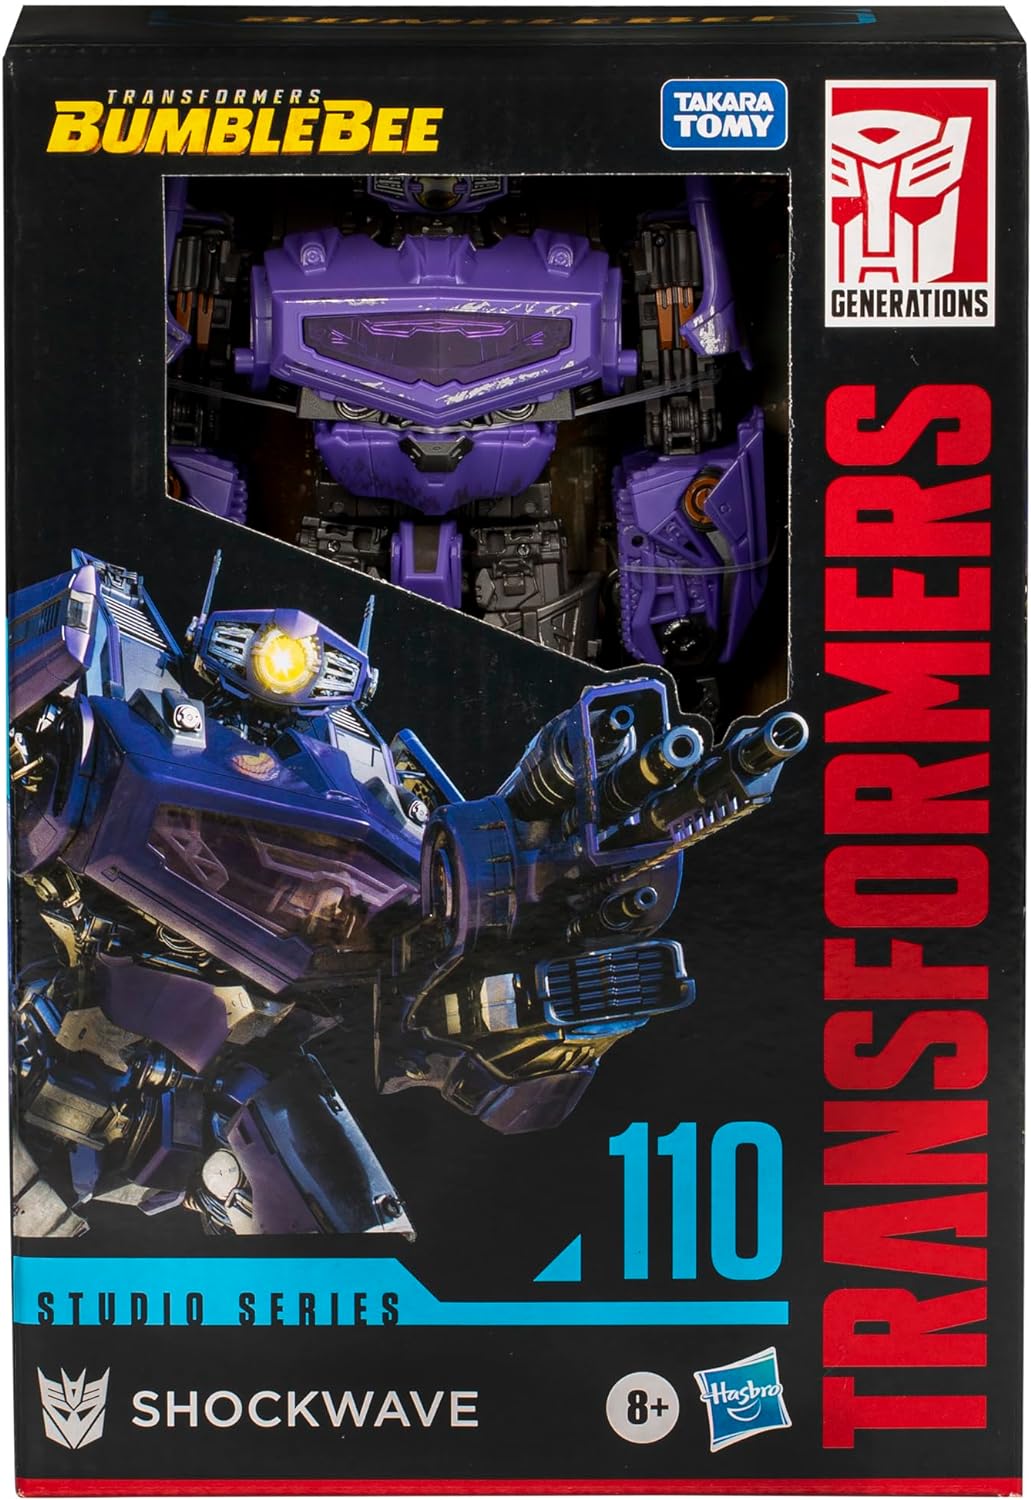 Transformers Generations "Bumblebee" Studio Series 110 Shockwave